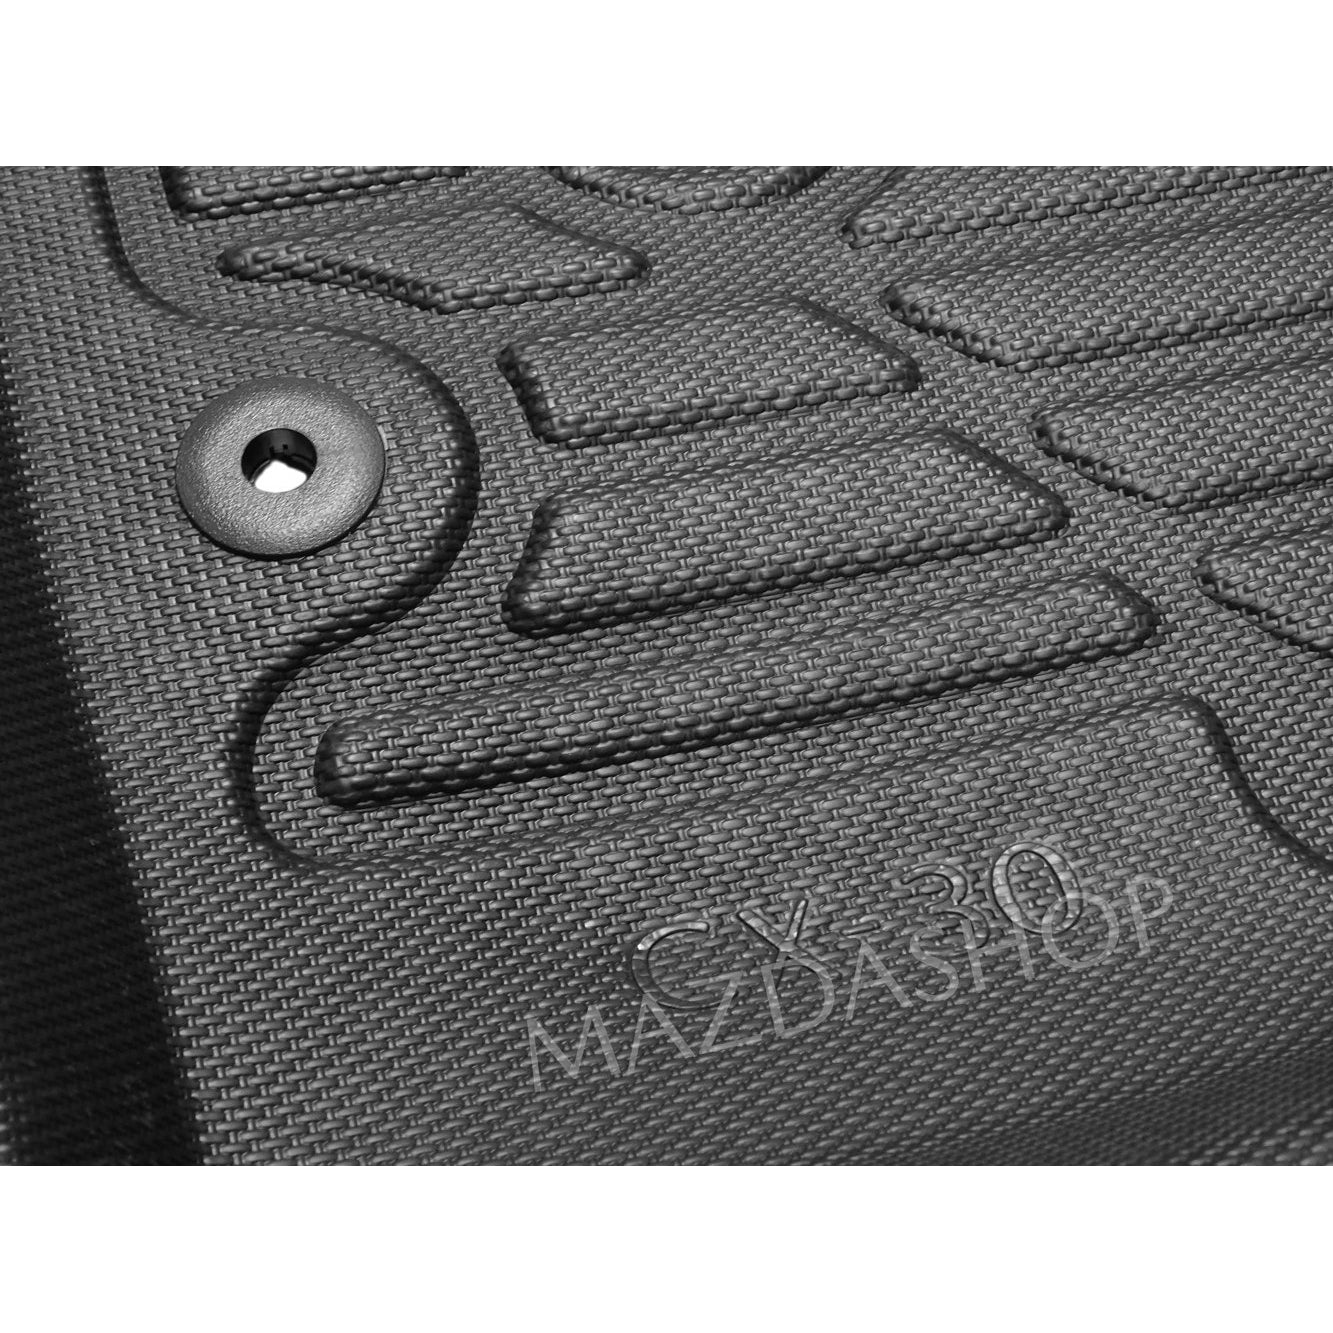 Floor Liners (Front & Rear) - Value Line | Mazda CX-30 (2020-2022)